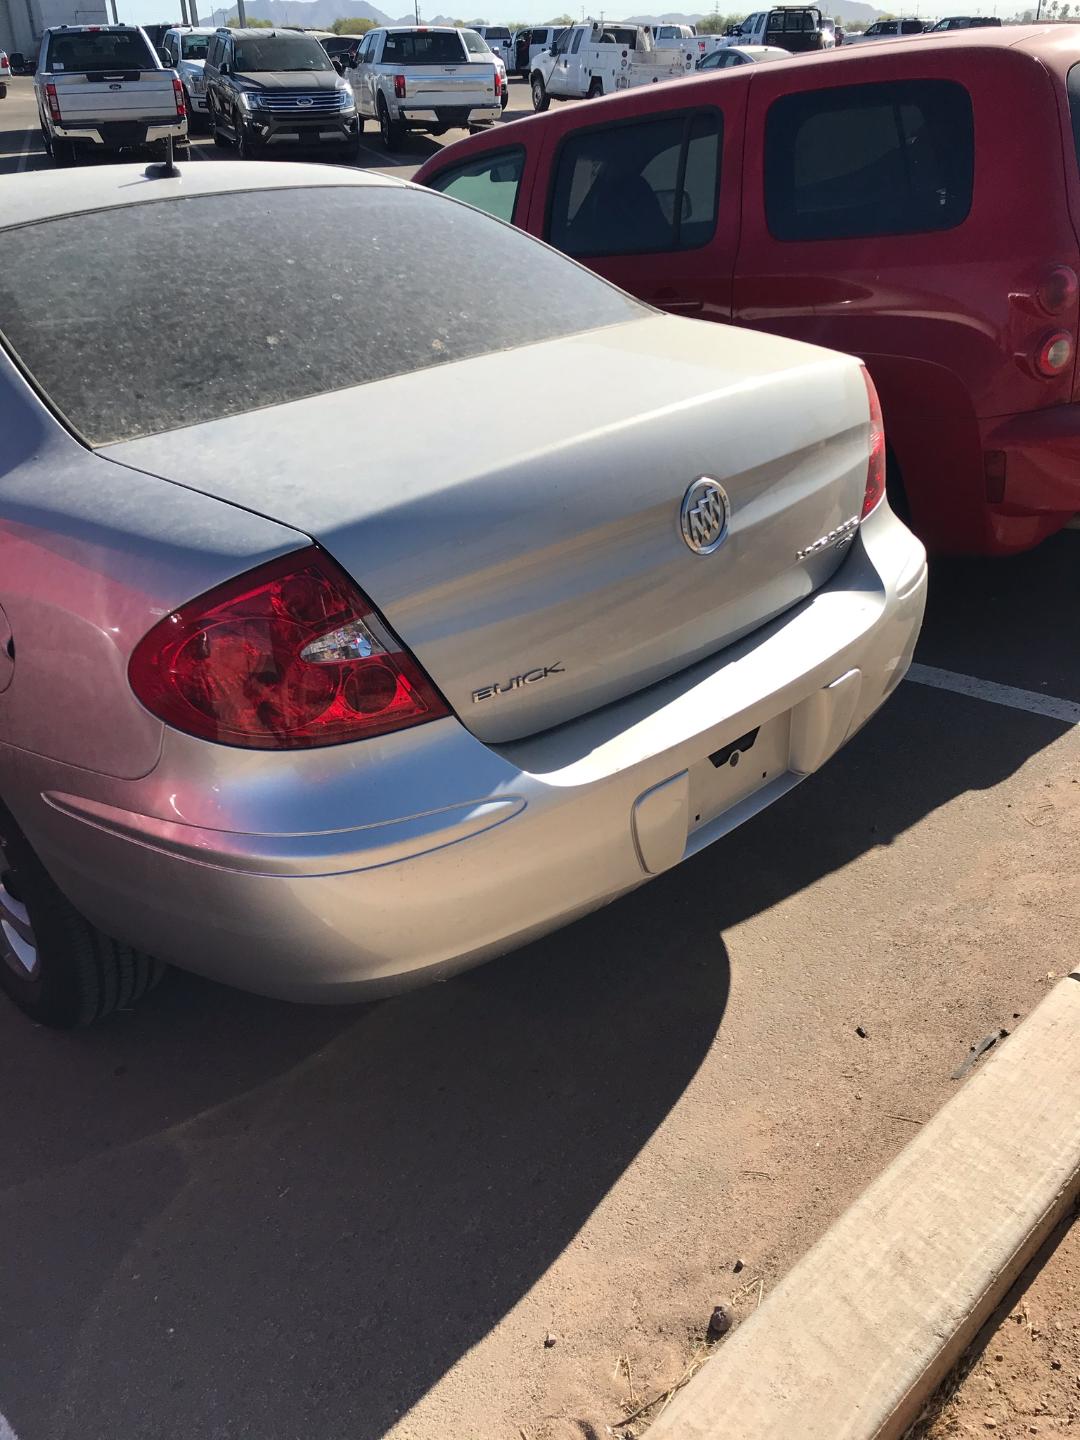 "K" on Buick logo on trunk missing in dealer yard 